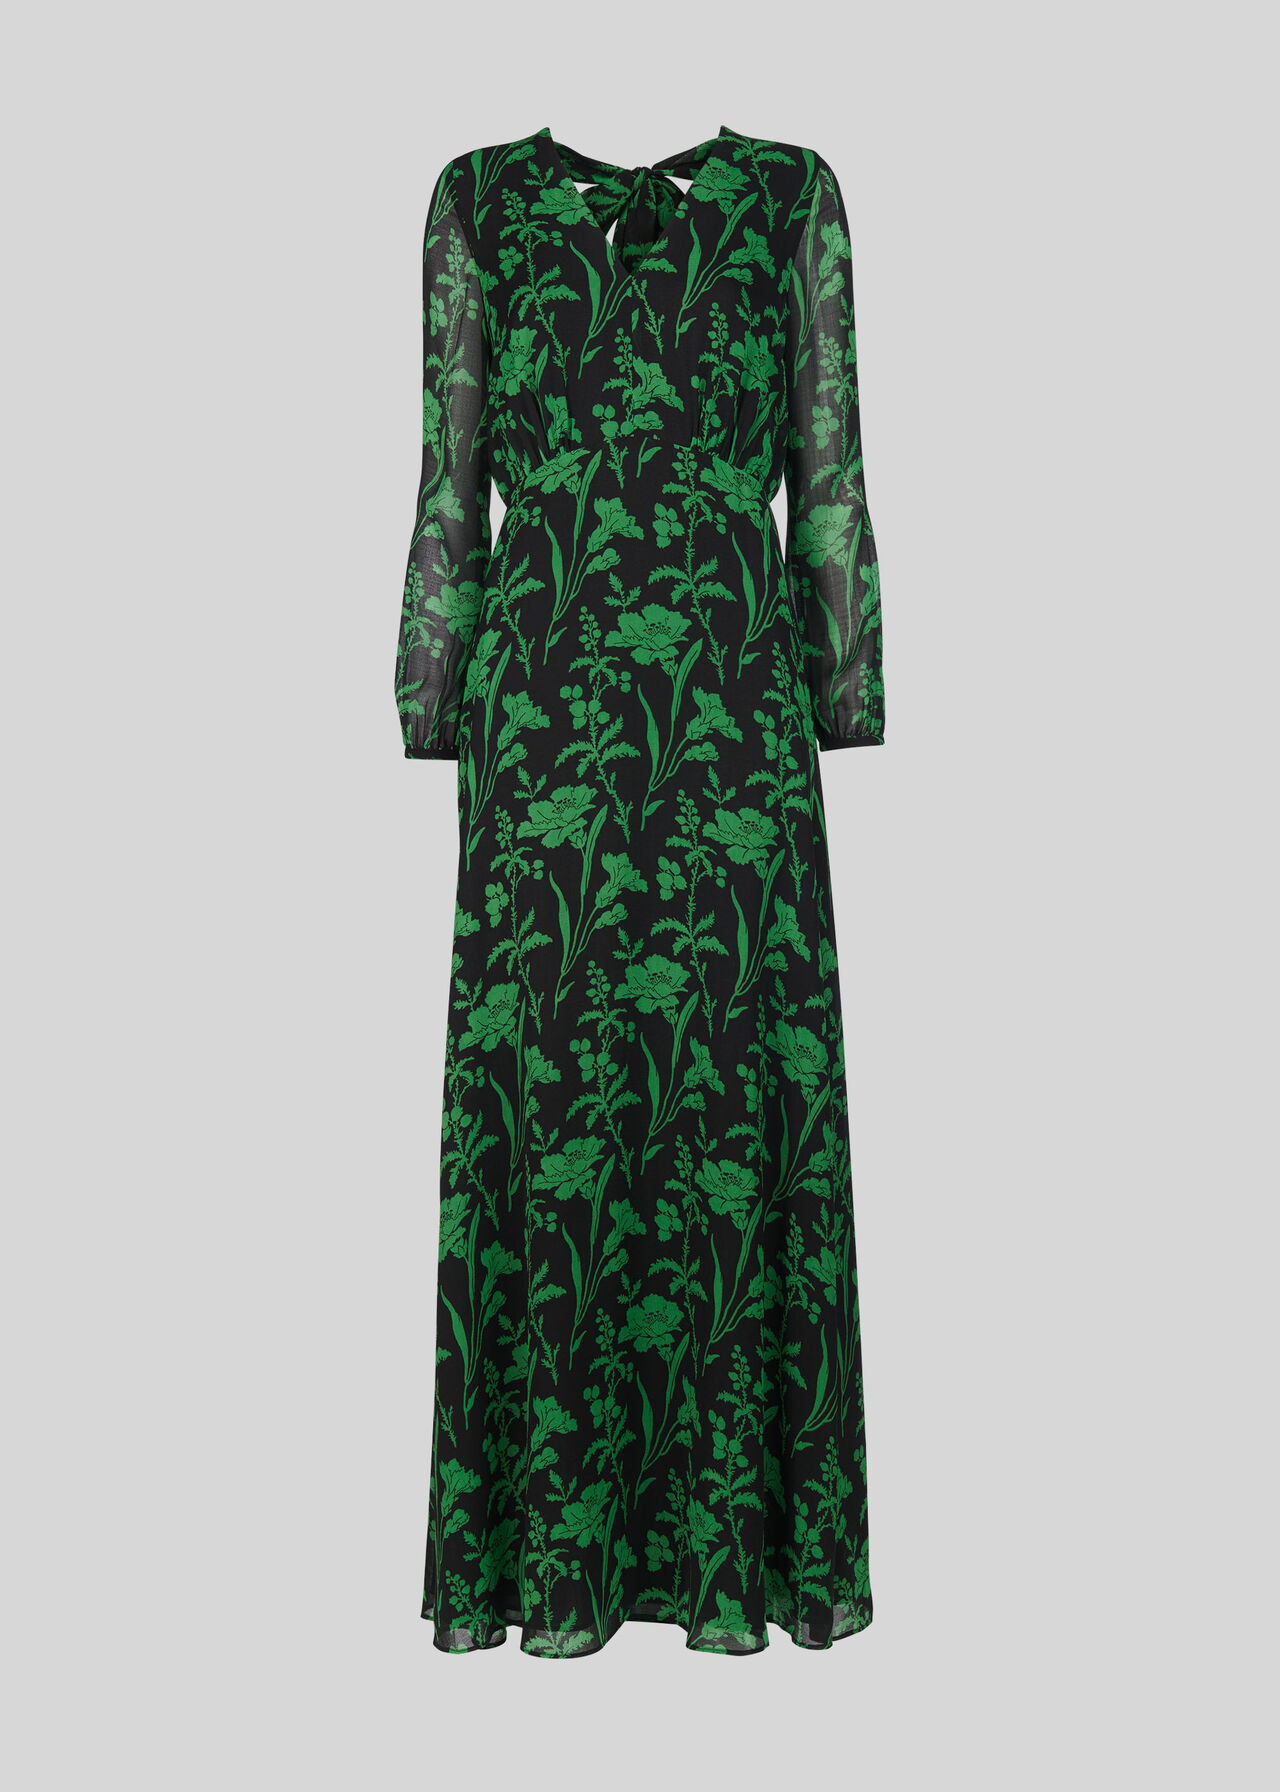 Valerie Woodland Floral Dress Green/Multi